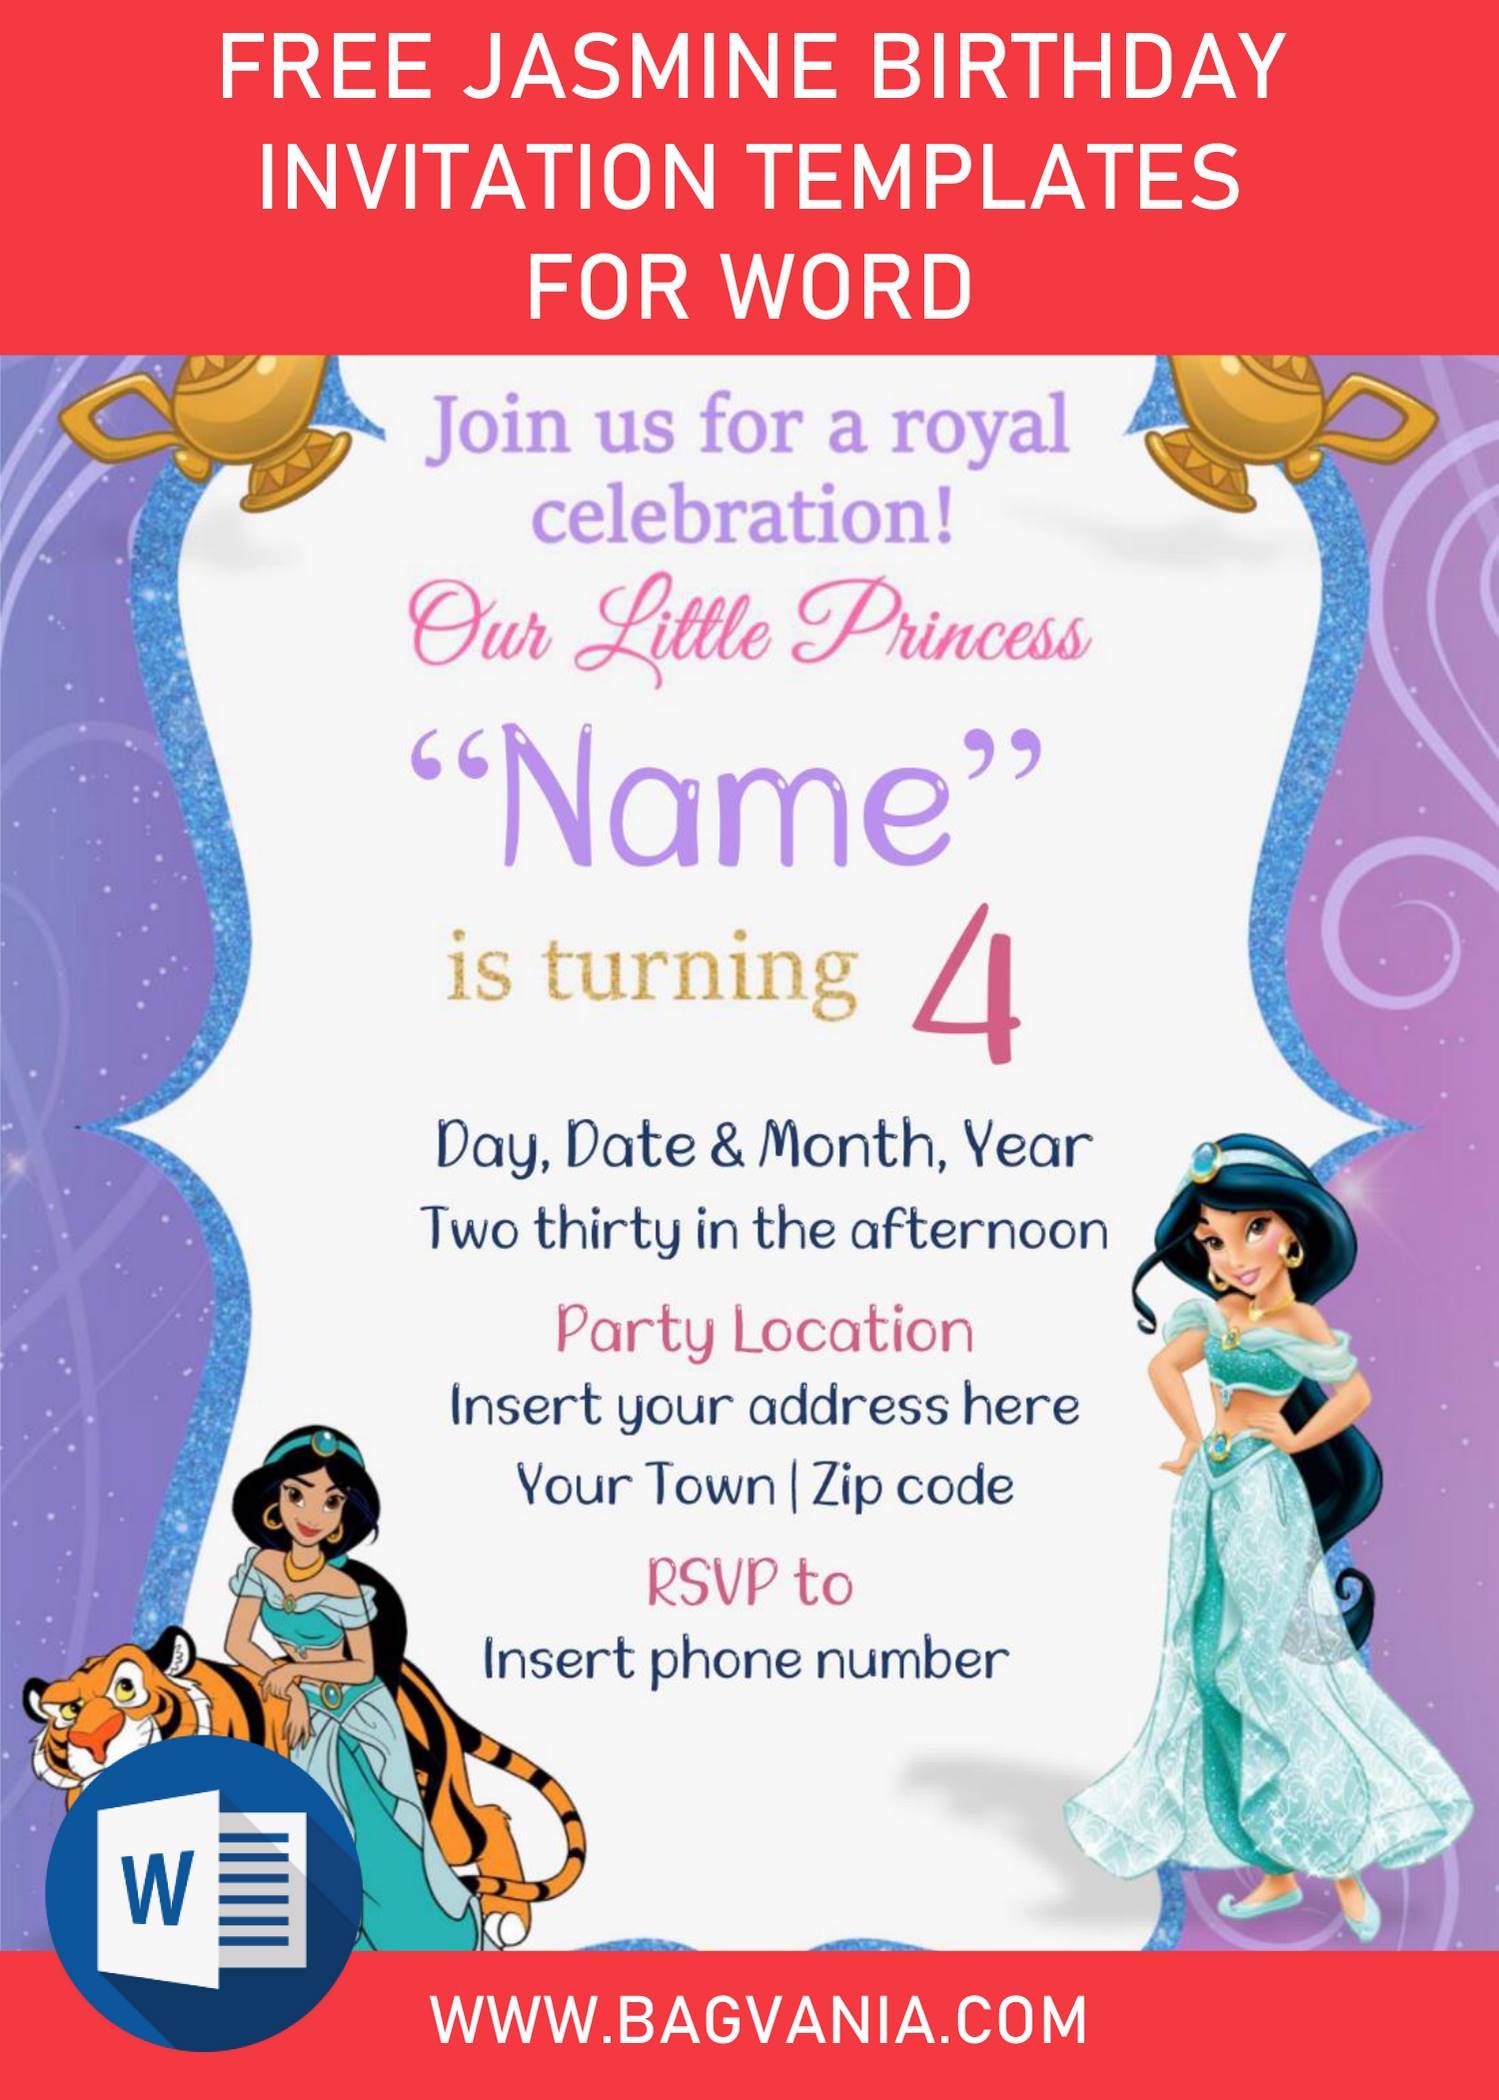 Free Jasmine Birthday Invitation Templates For Word  FREE Throughout Free Dinner Invitation Templates For Word